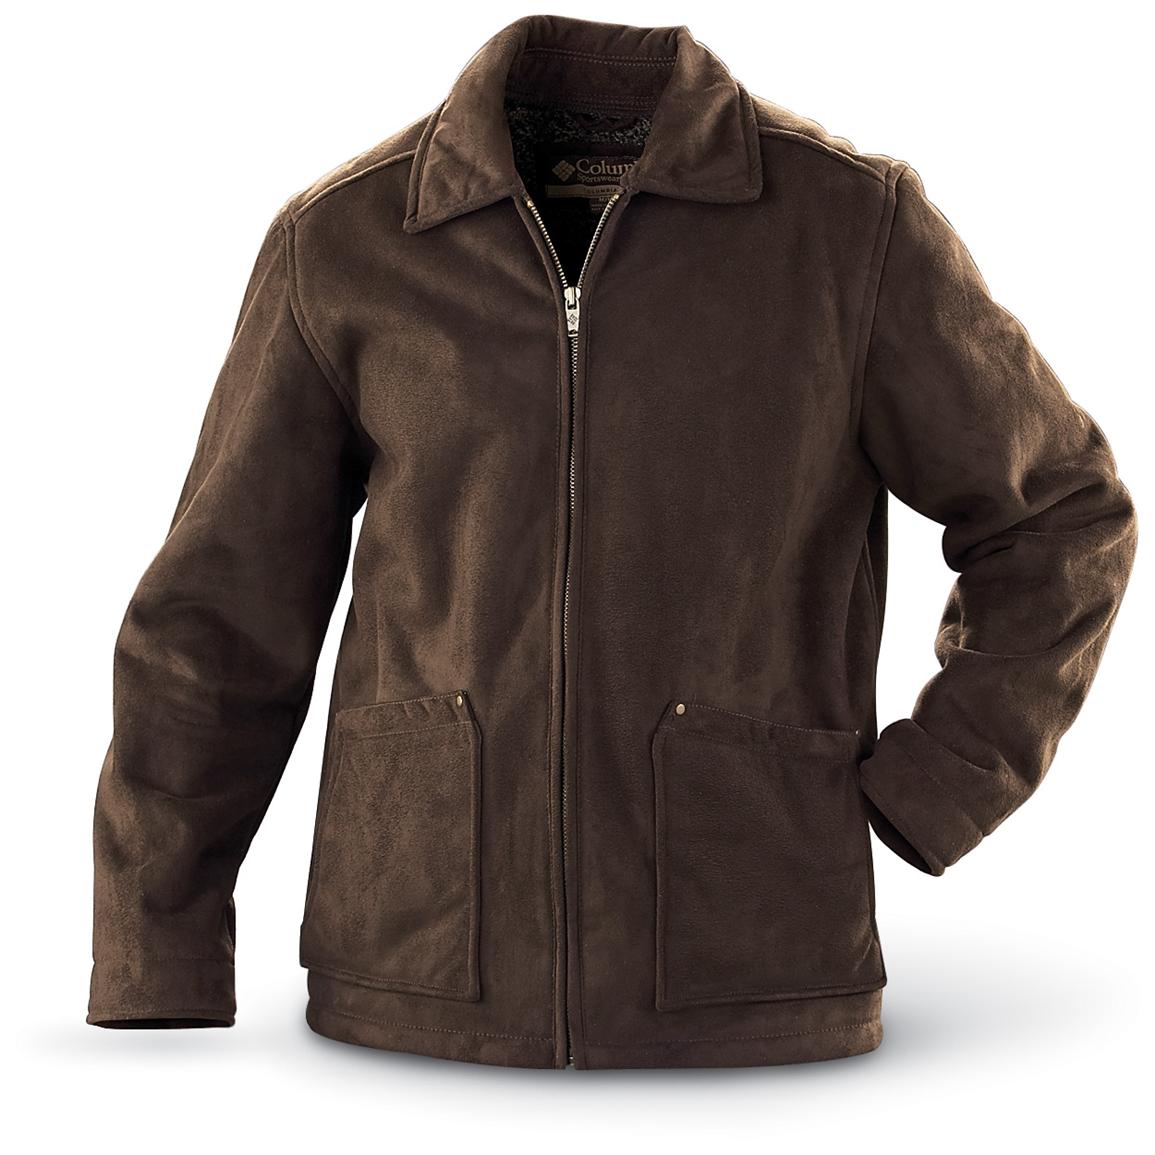 columbia jacket brown